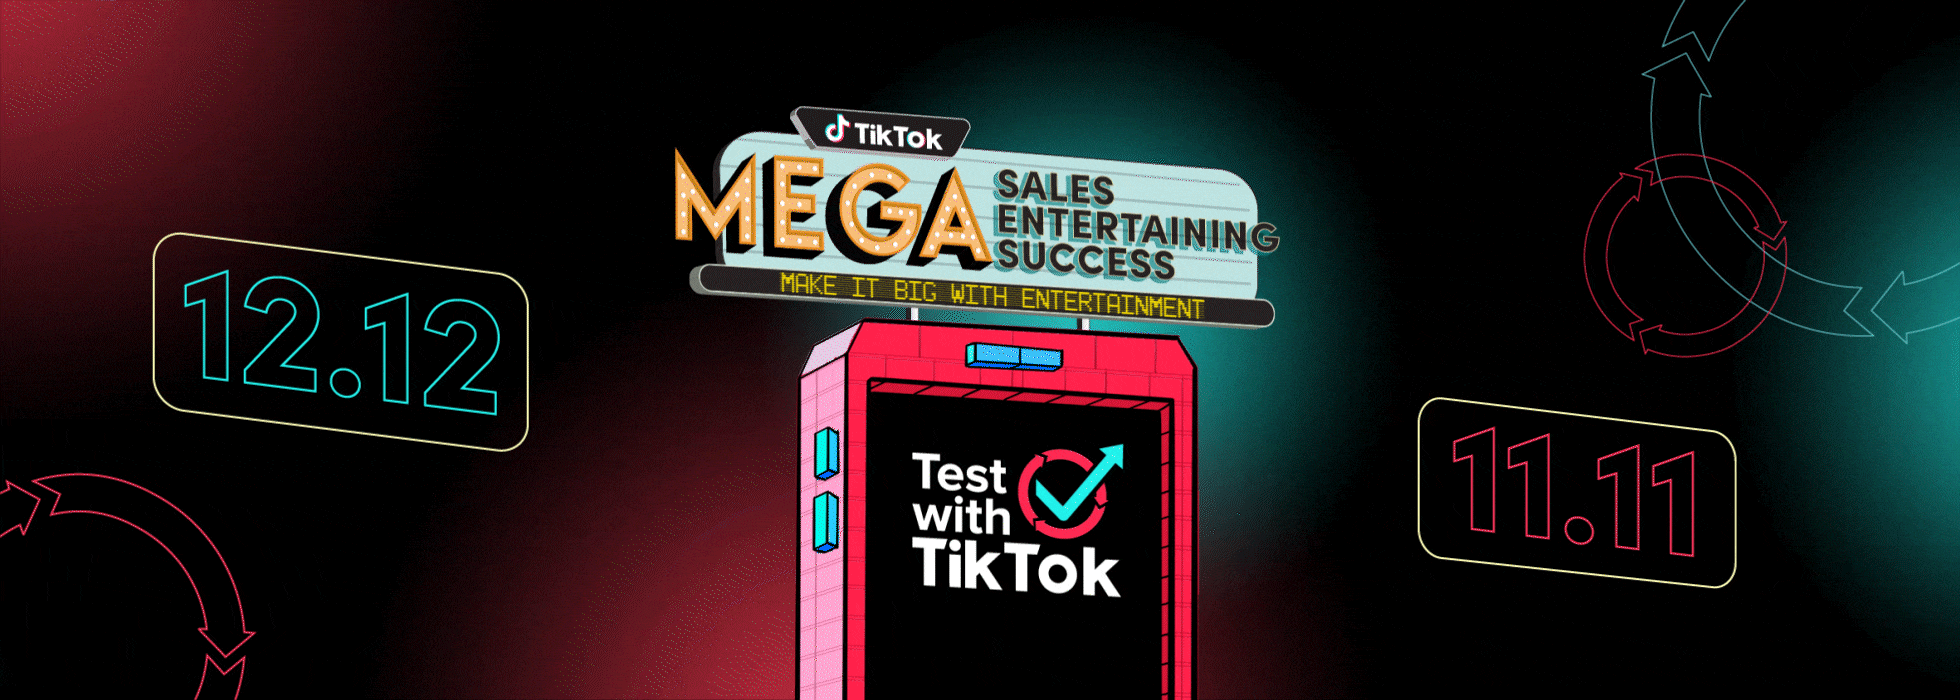 IMAGE 1 test-with-tiktok-make-the-most-of-mega-sales-season